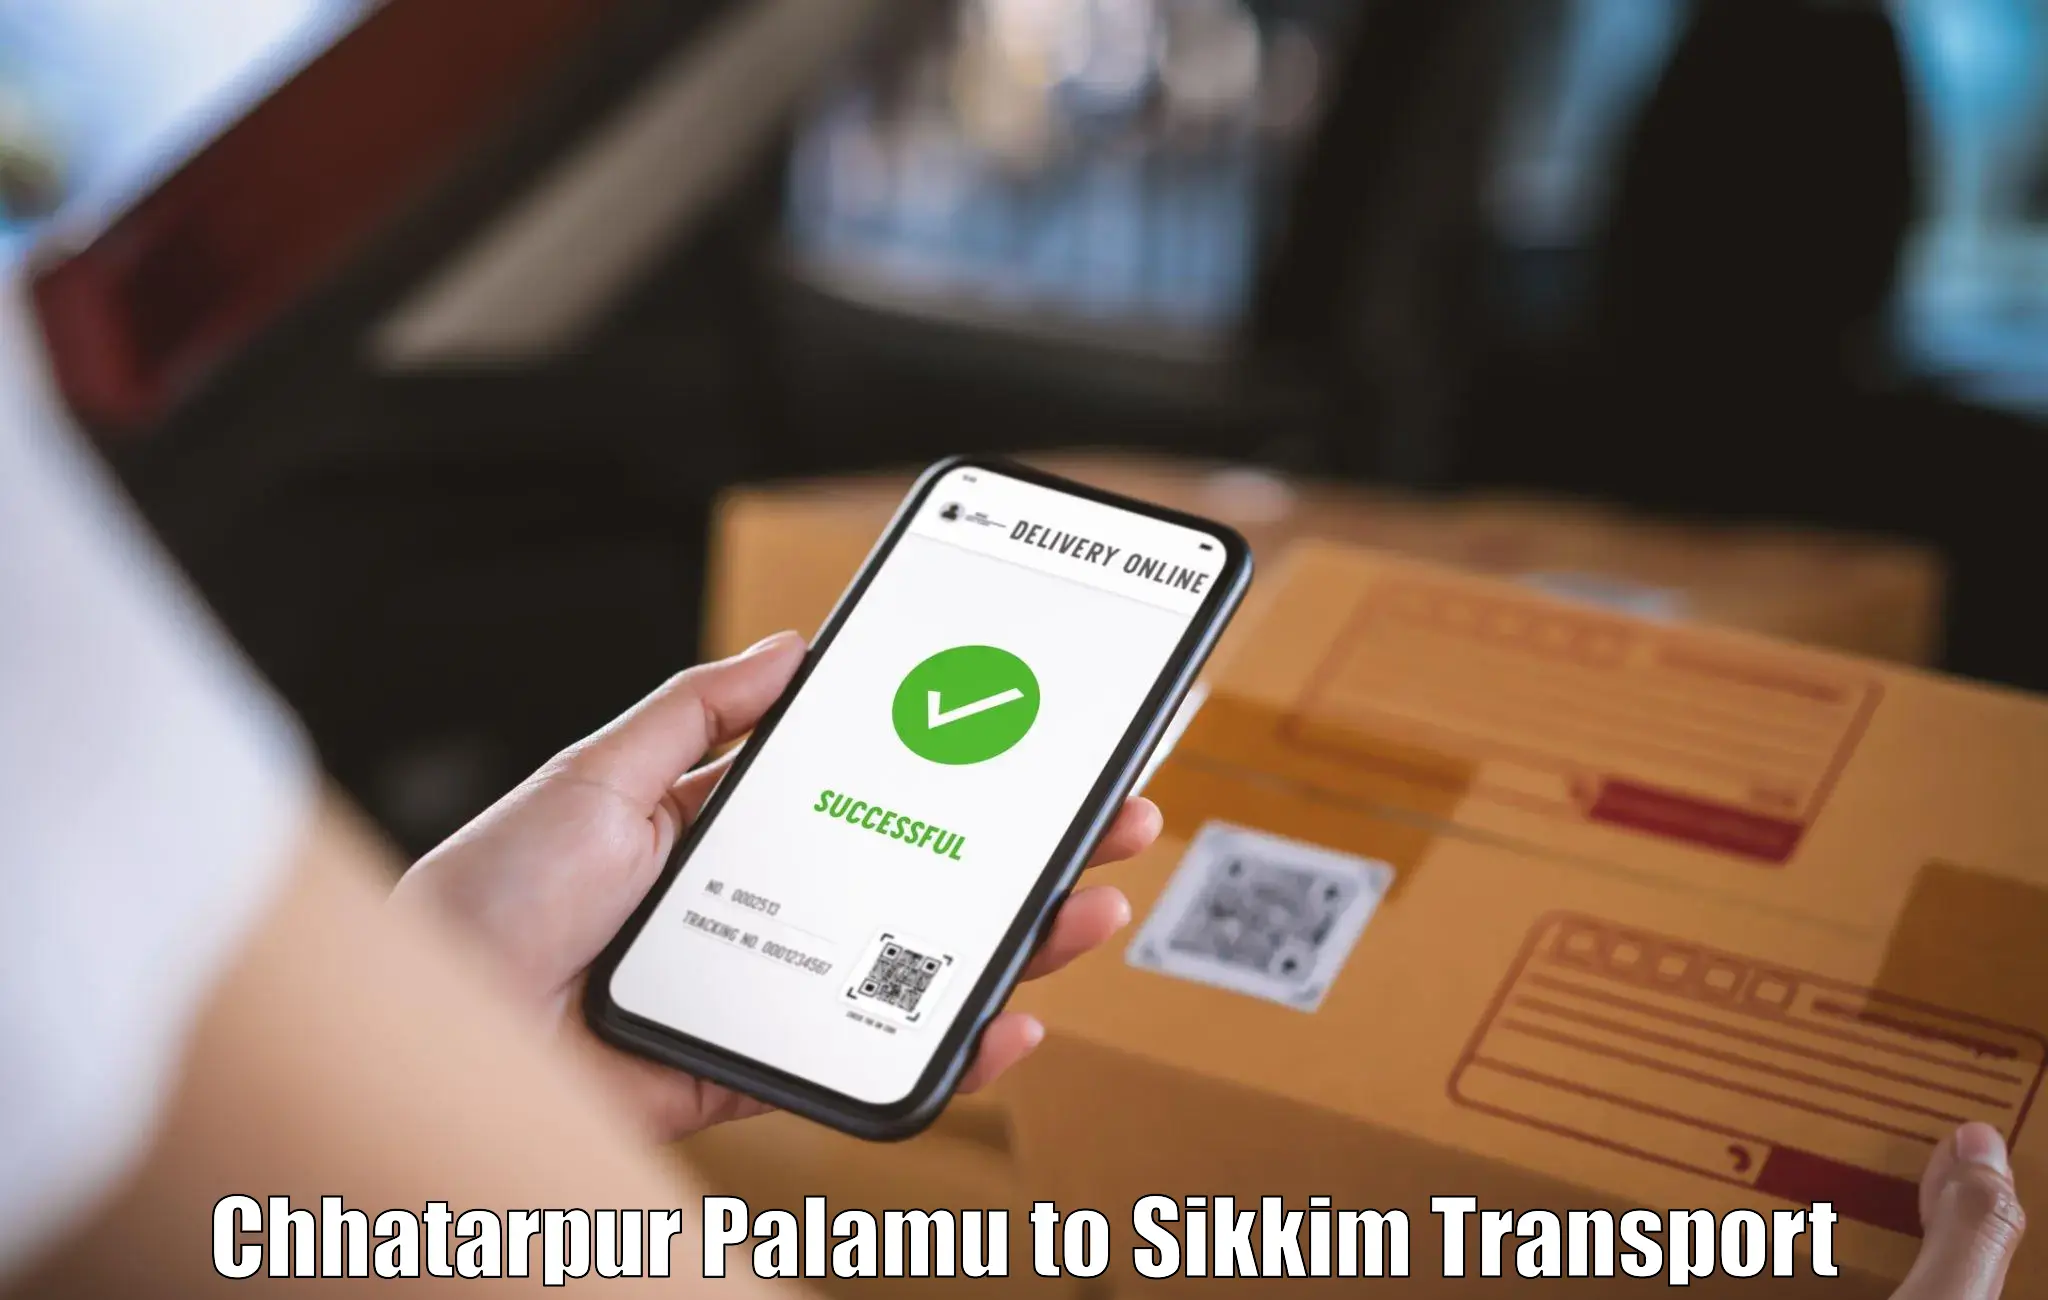 Transport shared services Chhatarpur Palamu to Jorethang